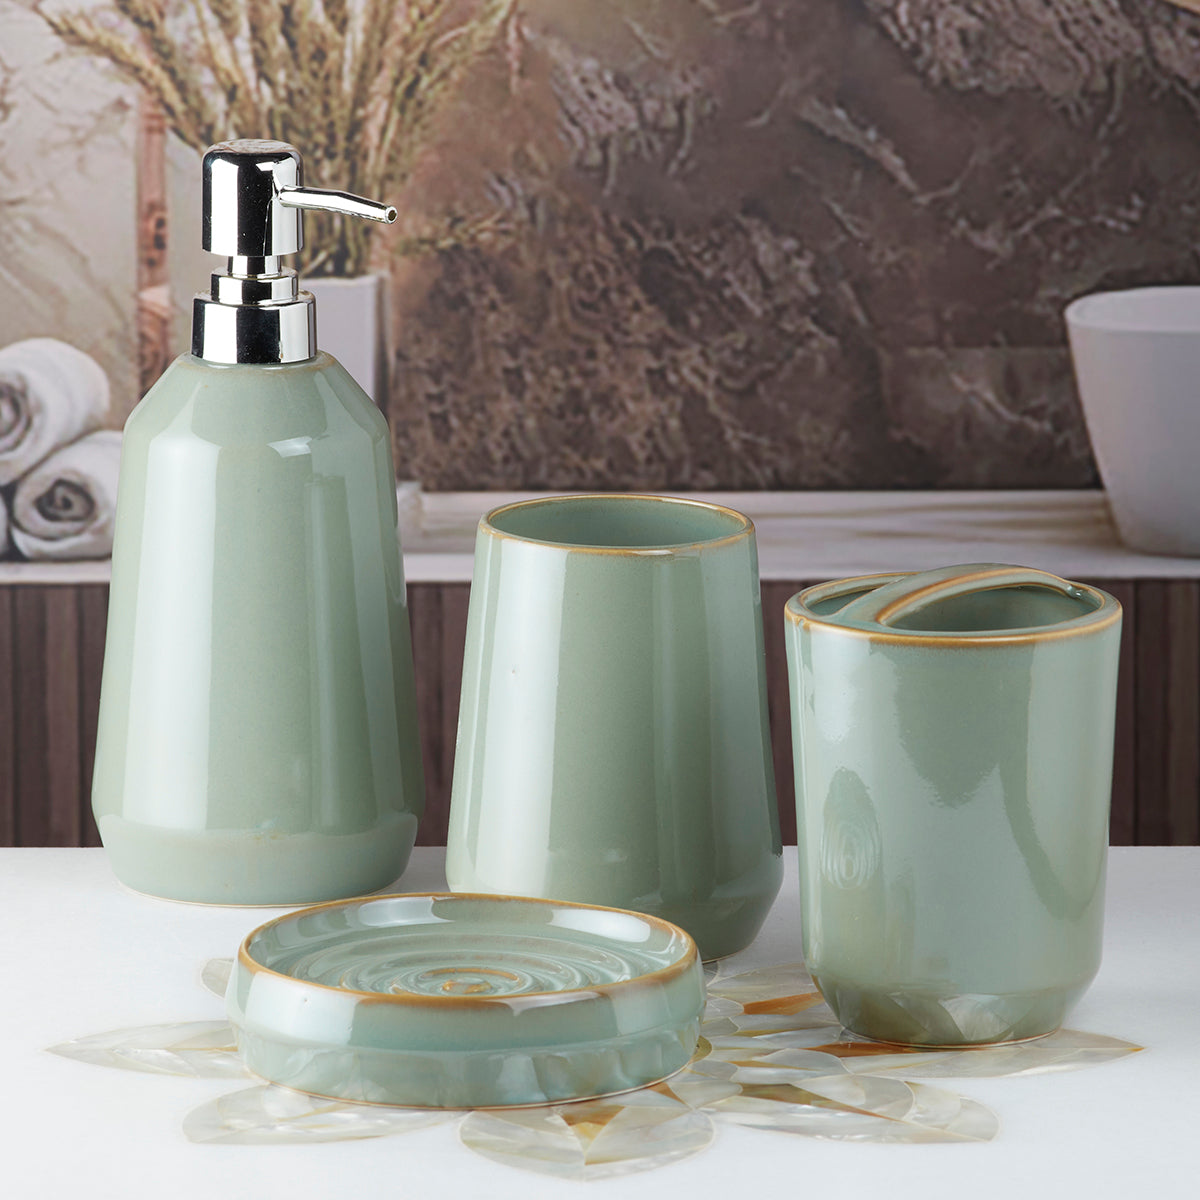 Ceramic Bathroom Accessories Set of 4 Bath Set with Soap Dispenser (7714)